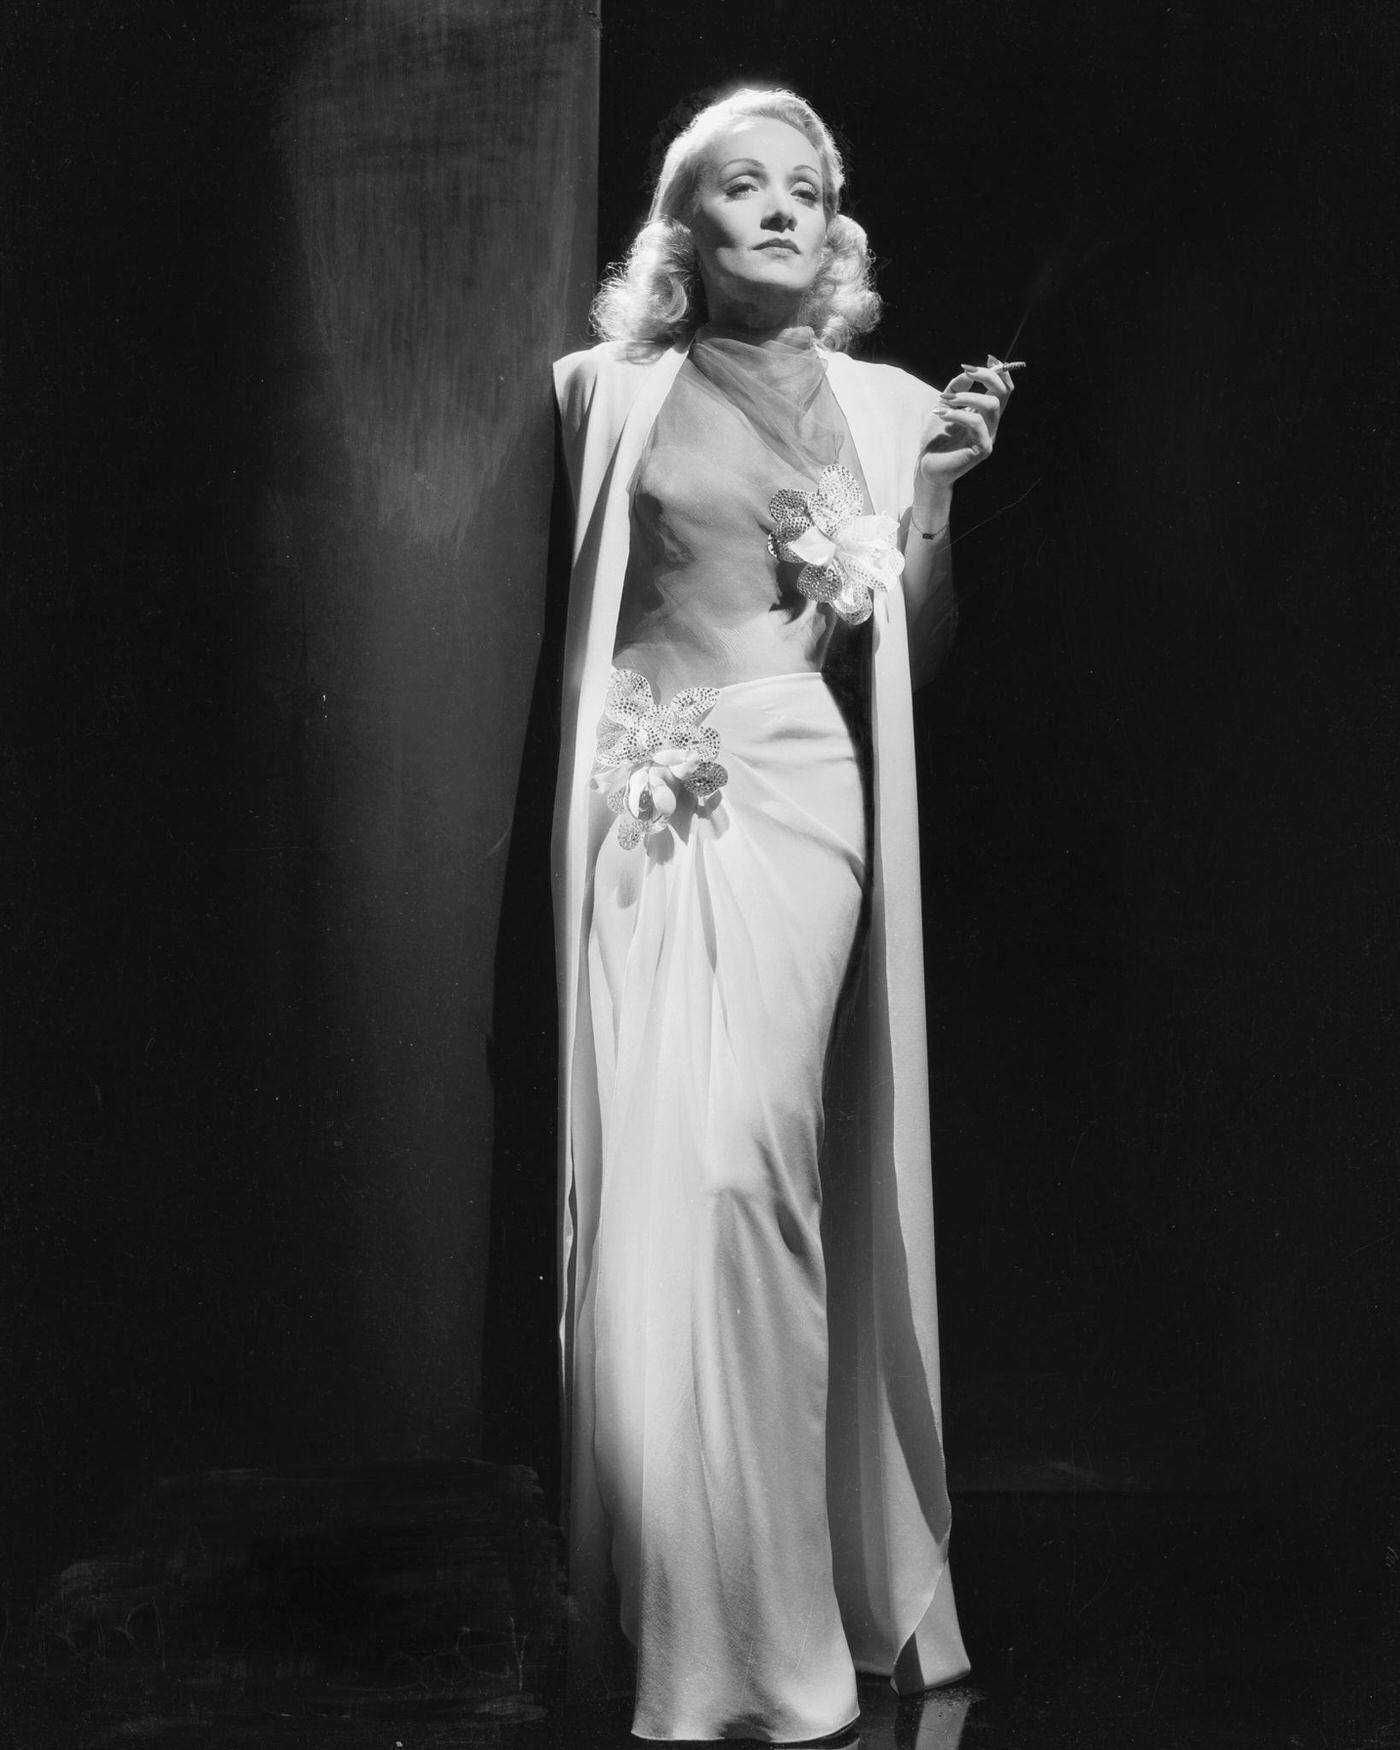 Marlene Dietrich looks stunning in an elegant white dress from 1937.